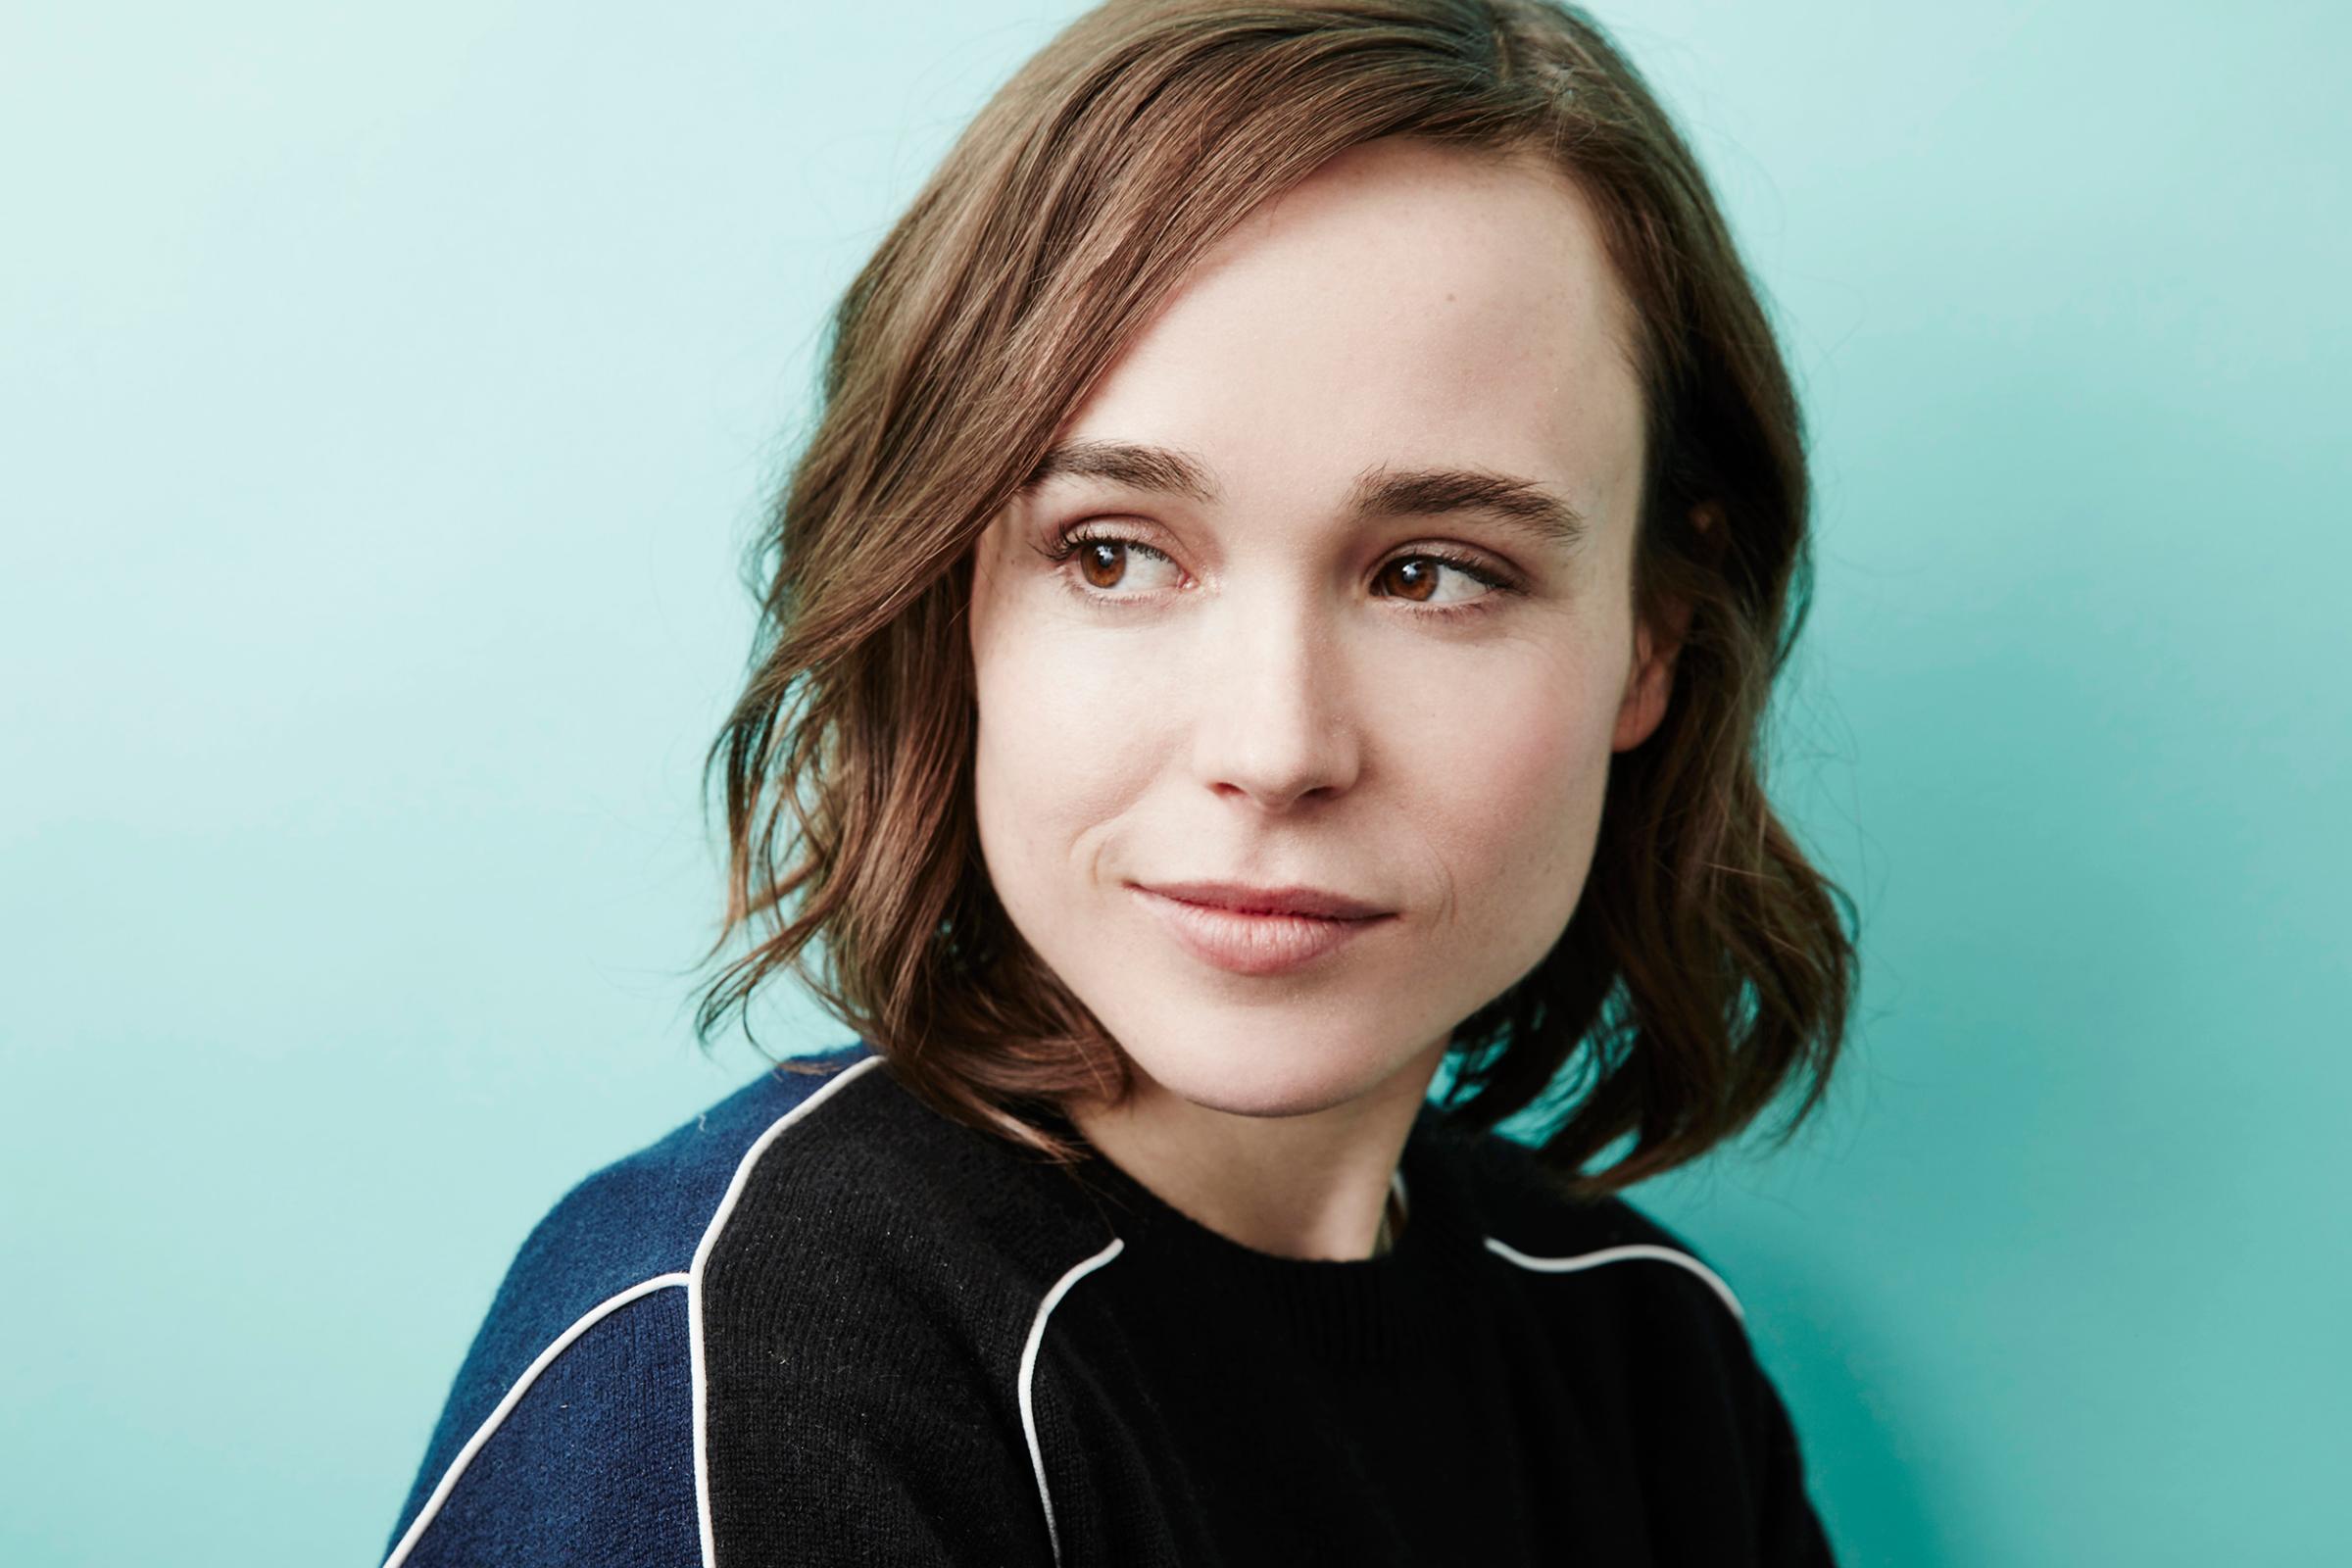 Ellen Page of 'Tallulah' poses at the 2016 Sundance Film Festival Getty Images Portrait Studio in Park City, Utah on Jan. 24, 2016.